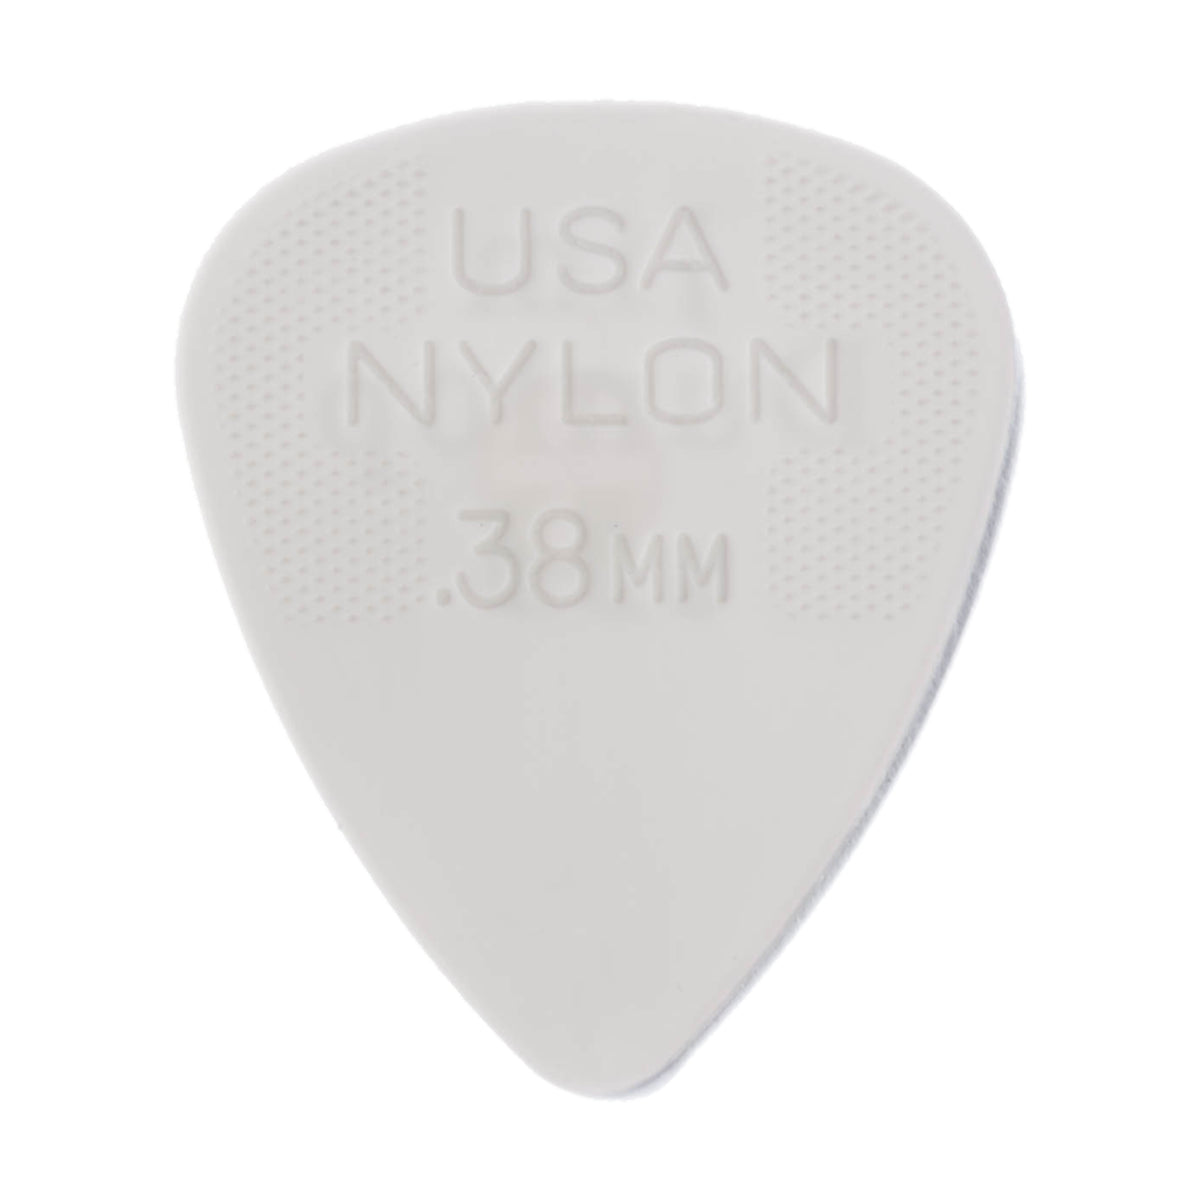 Dunlop Nylon Standard Guitar Pick 0.38 Grey